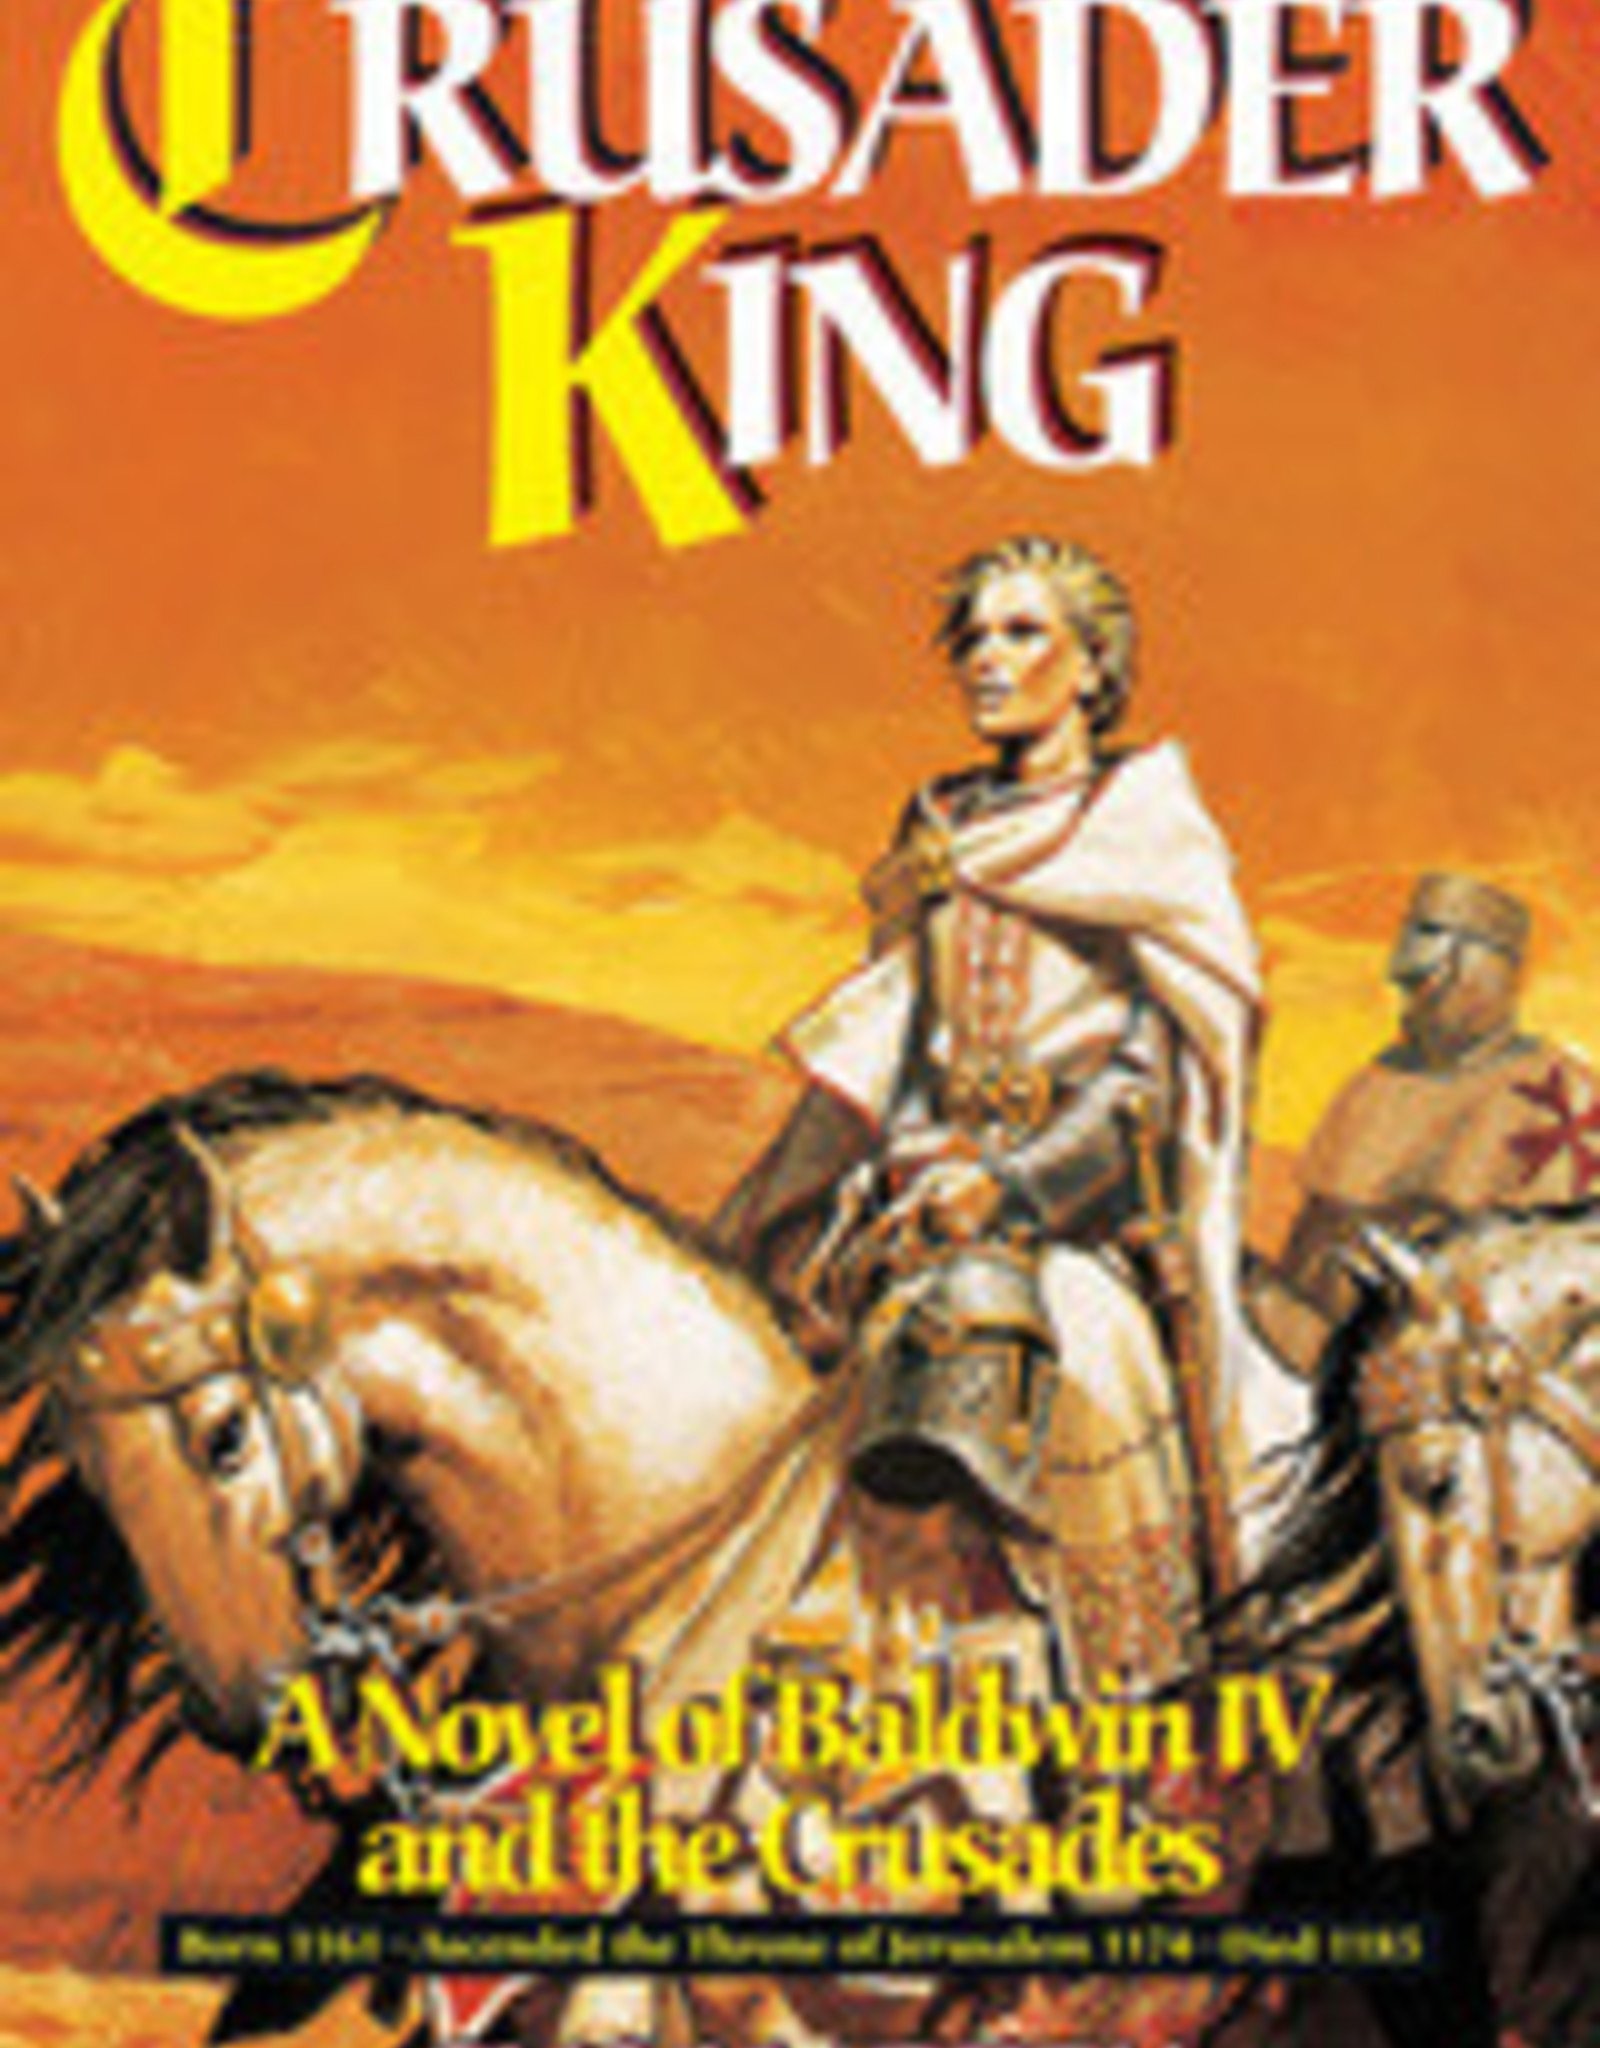 Crusader King:  A Novel of Baldwin IV and the Crusades, by Susan Peek (paperback)